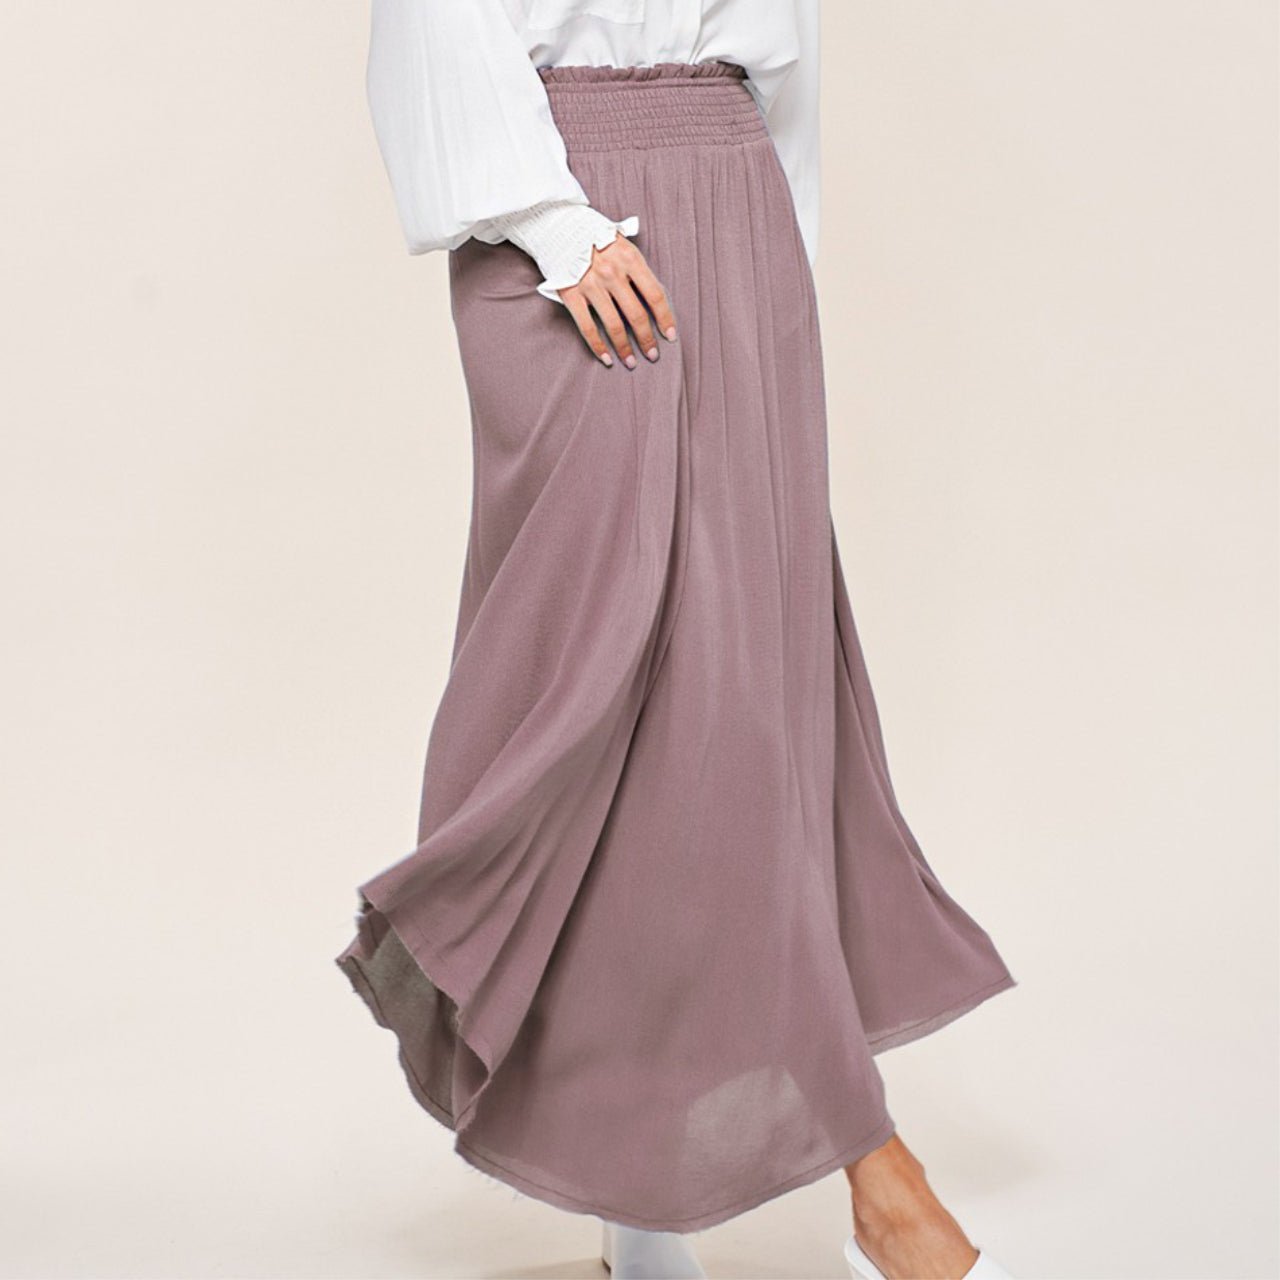 Sari Maxi Skirt With High Rise Smoked Waistband With Raw Edge Hem - The Graphic Tee